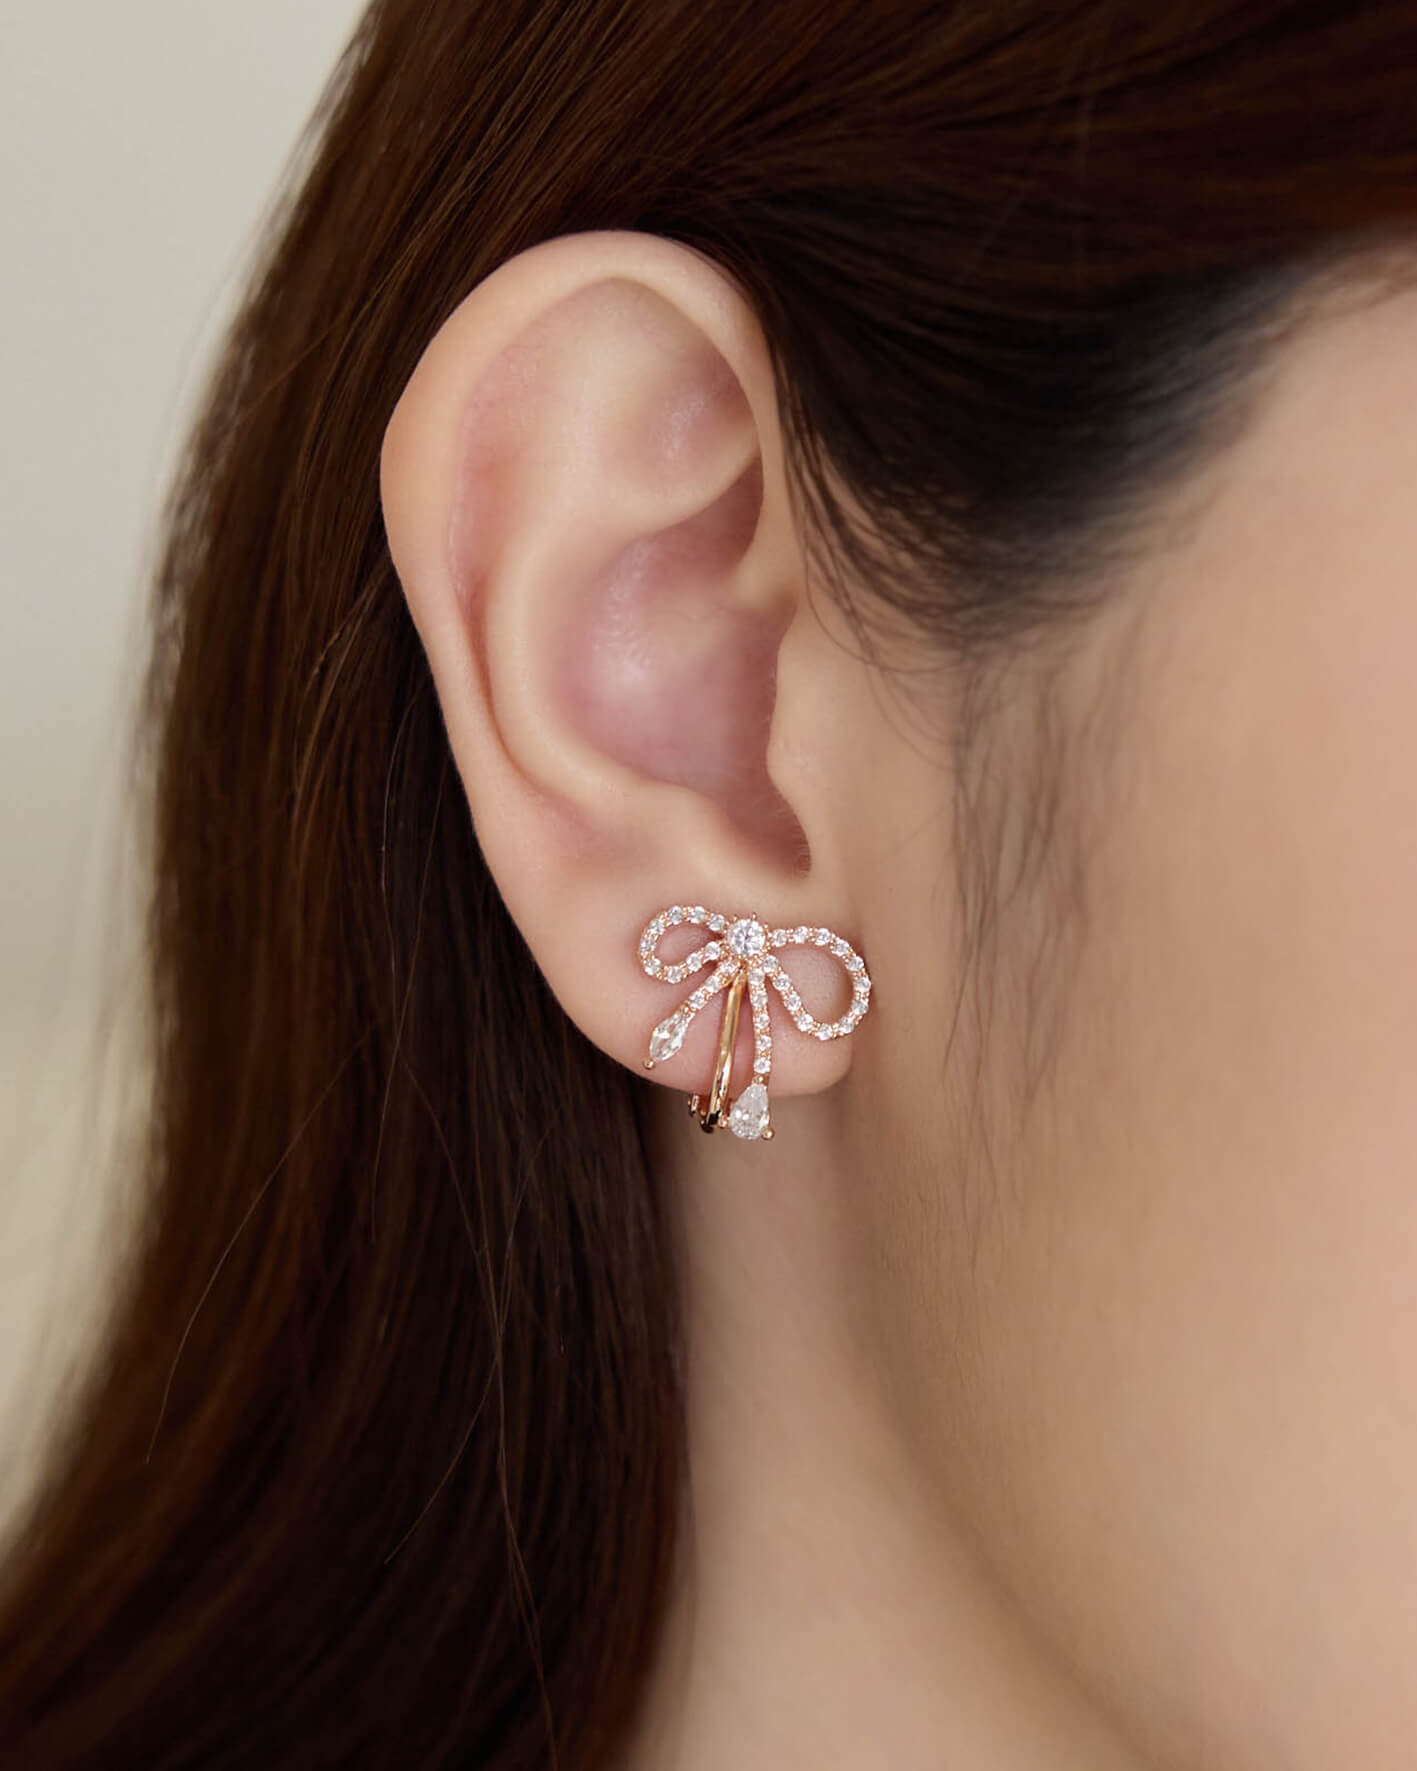 Eco安珂,韓國飾品,韓國耳環,蝴蝶結耳環,螺旋夾耳環,可調式耳夾耳環,螺旋夾垂墜耳環